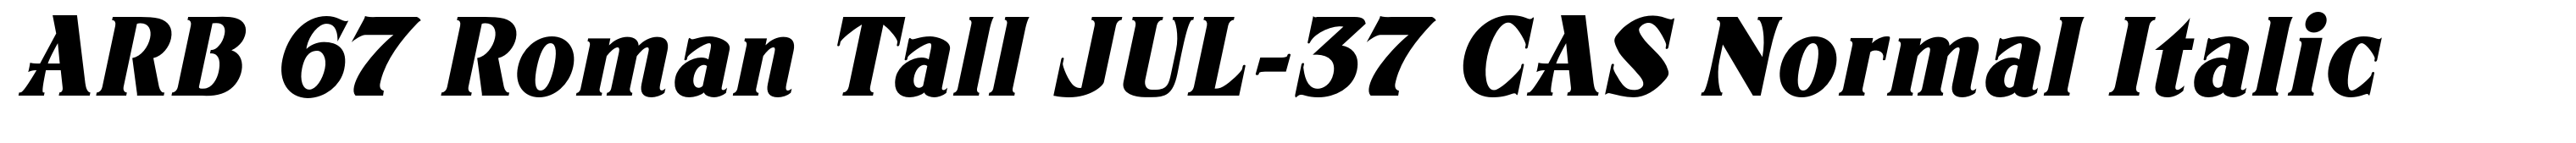 ARB 67 Roman Tall JUL-37 CAS Normal Italic